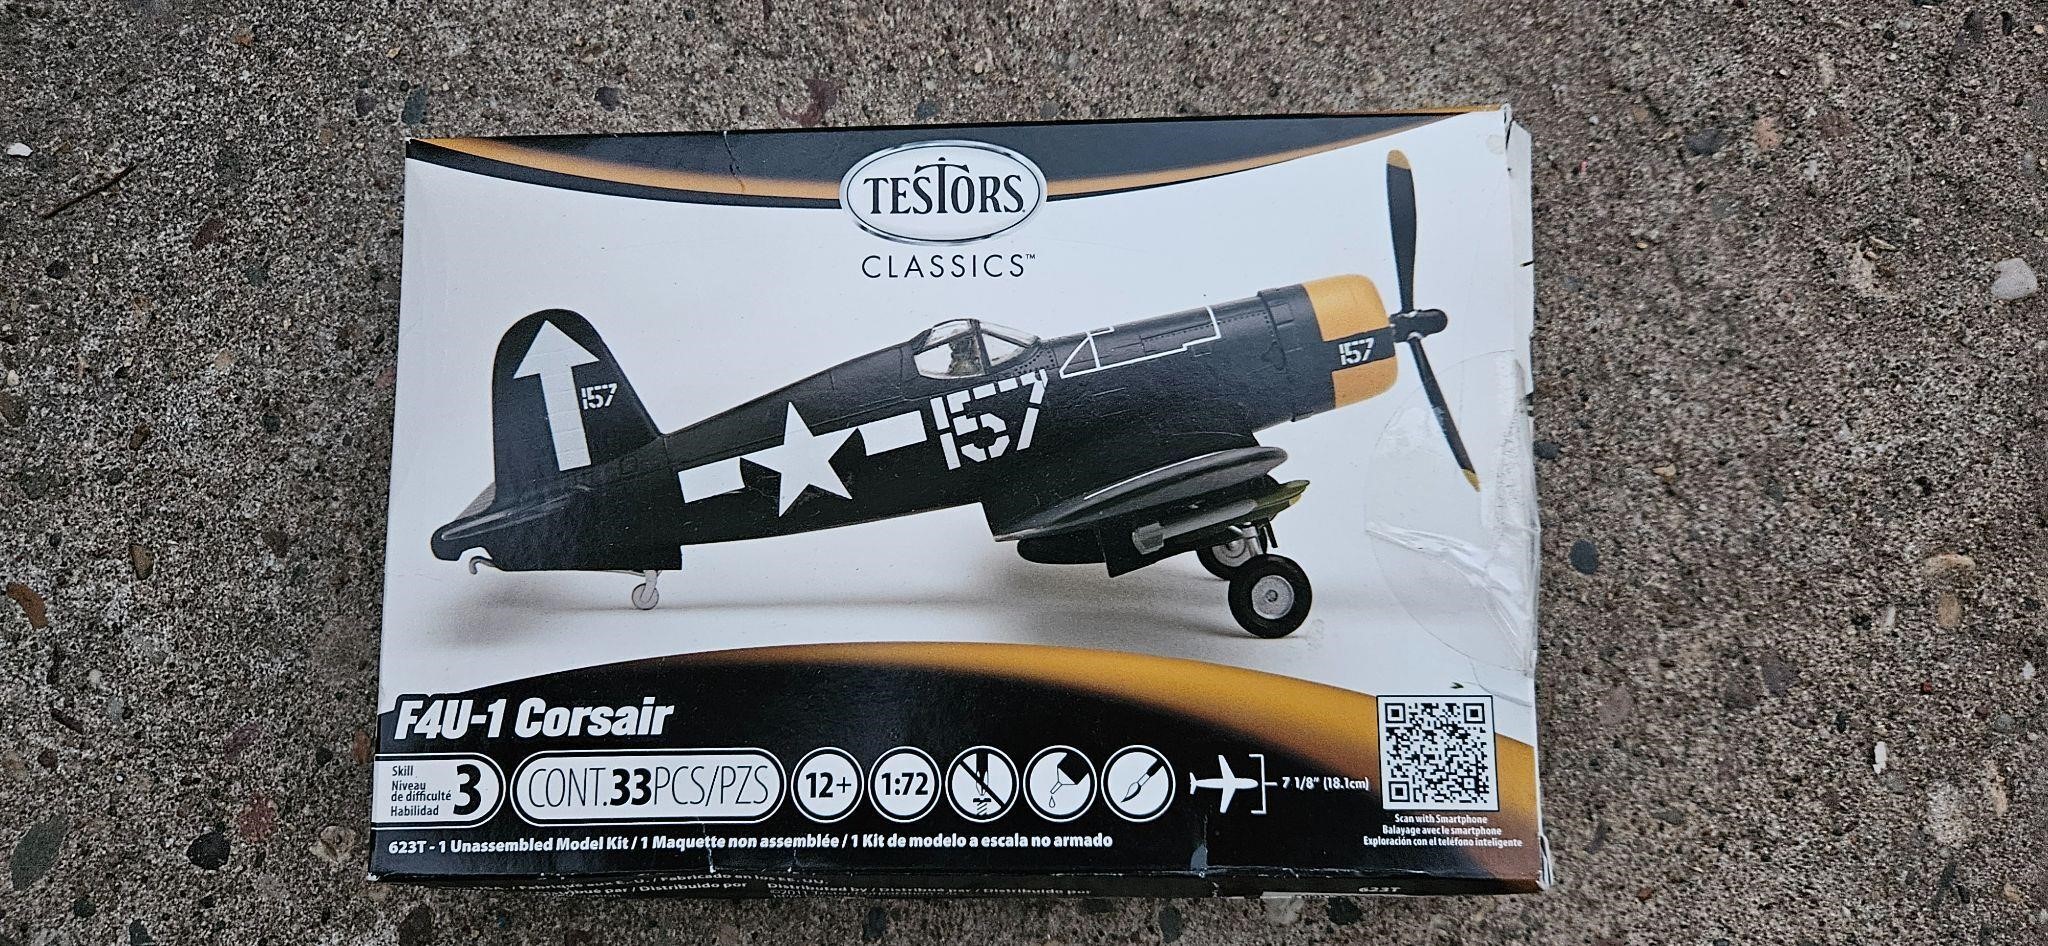 Testors Classics F4U-1 Corsair Airplane Model